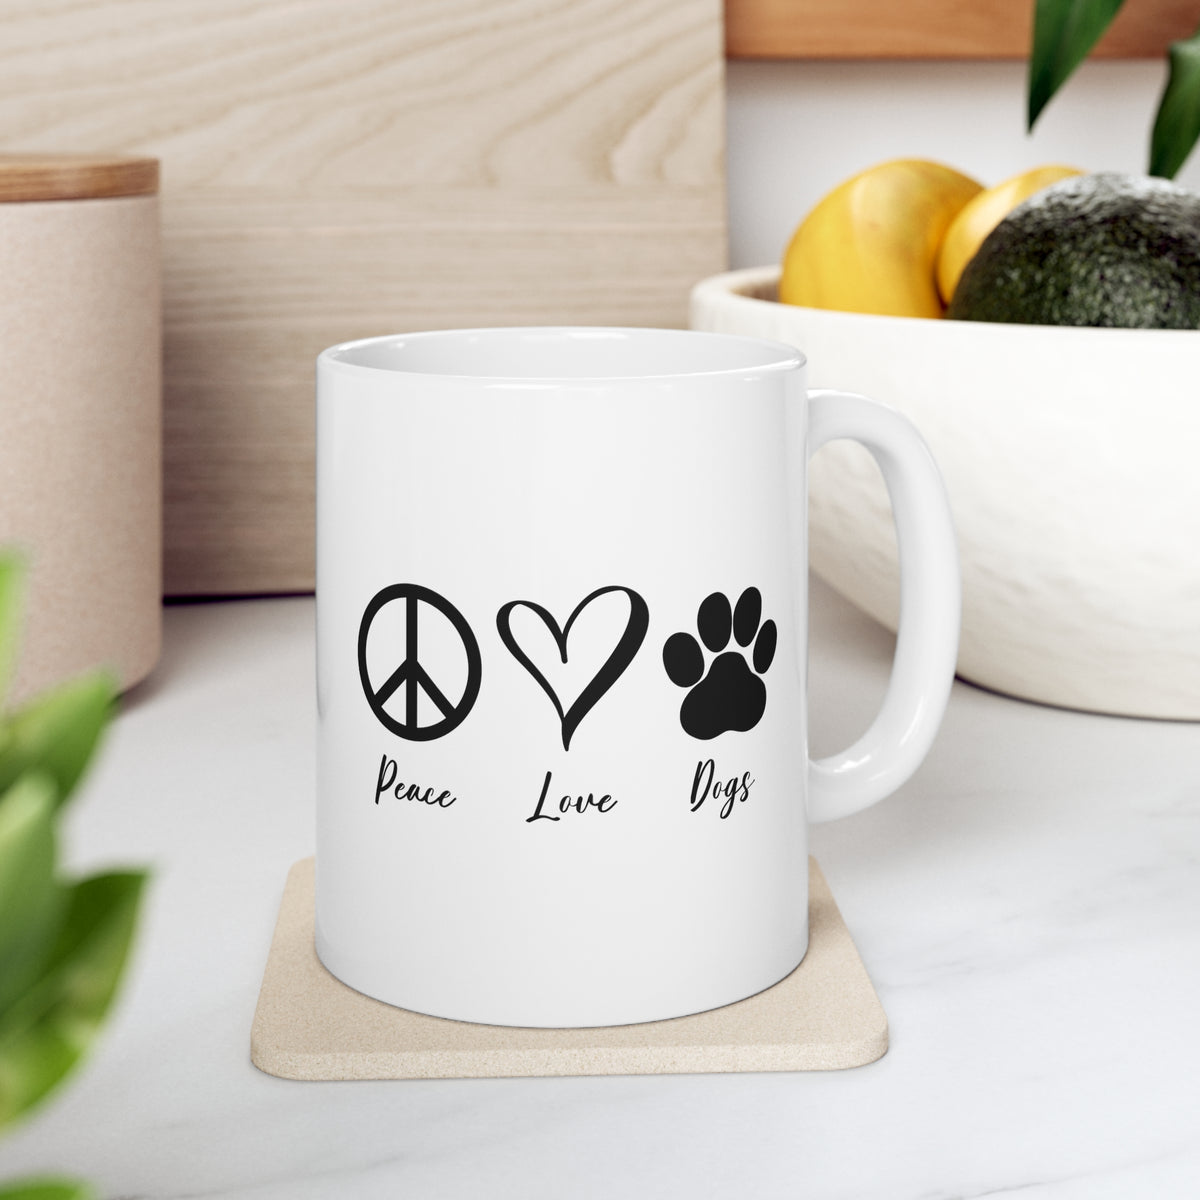 Peace, Love, Dogs - Ceramic Mug 11oz